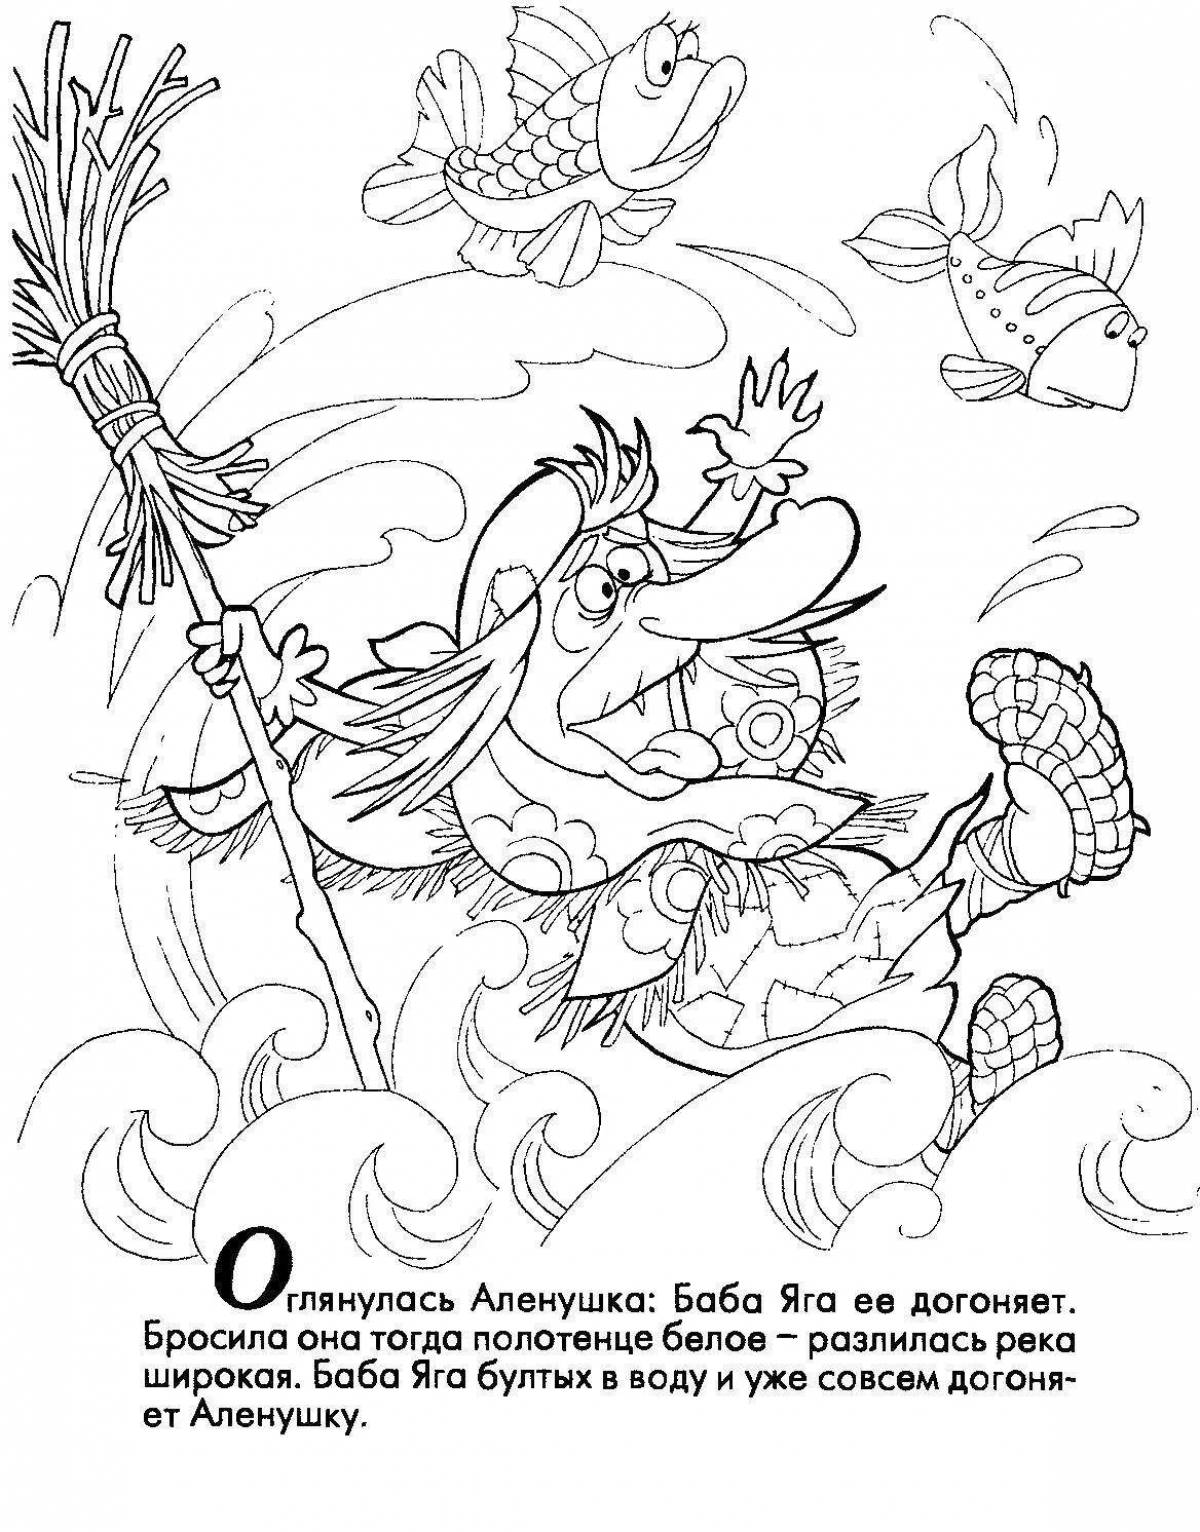 Amazing coloring book of baba yaga and goblin